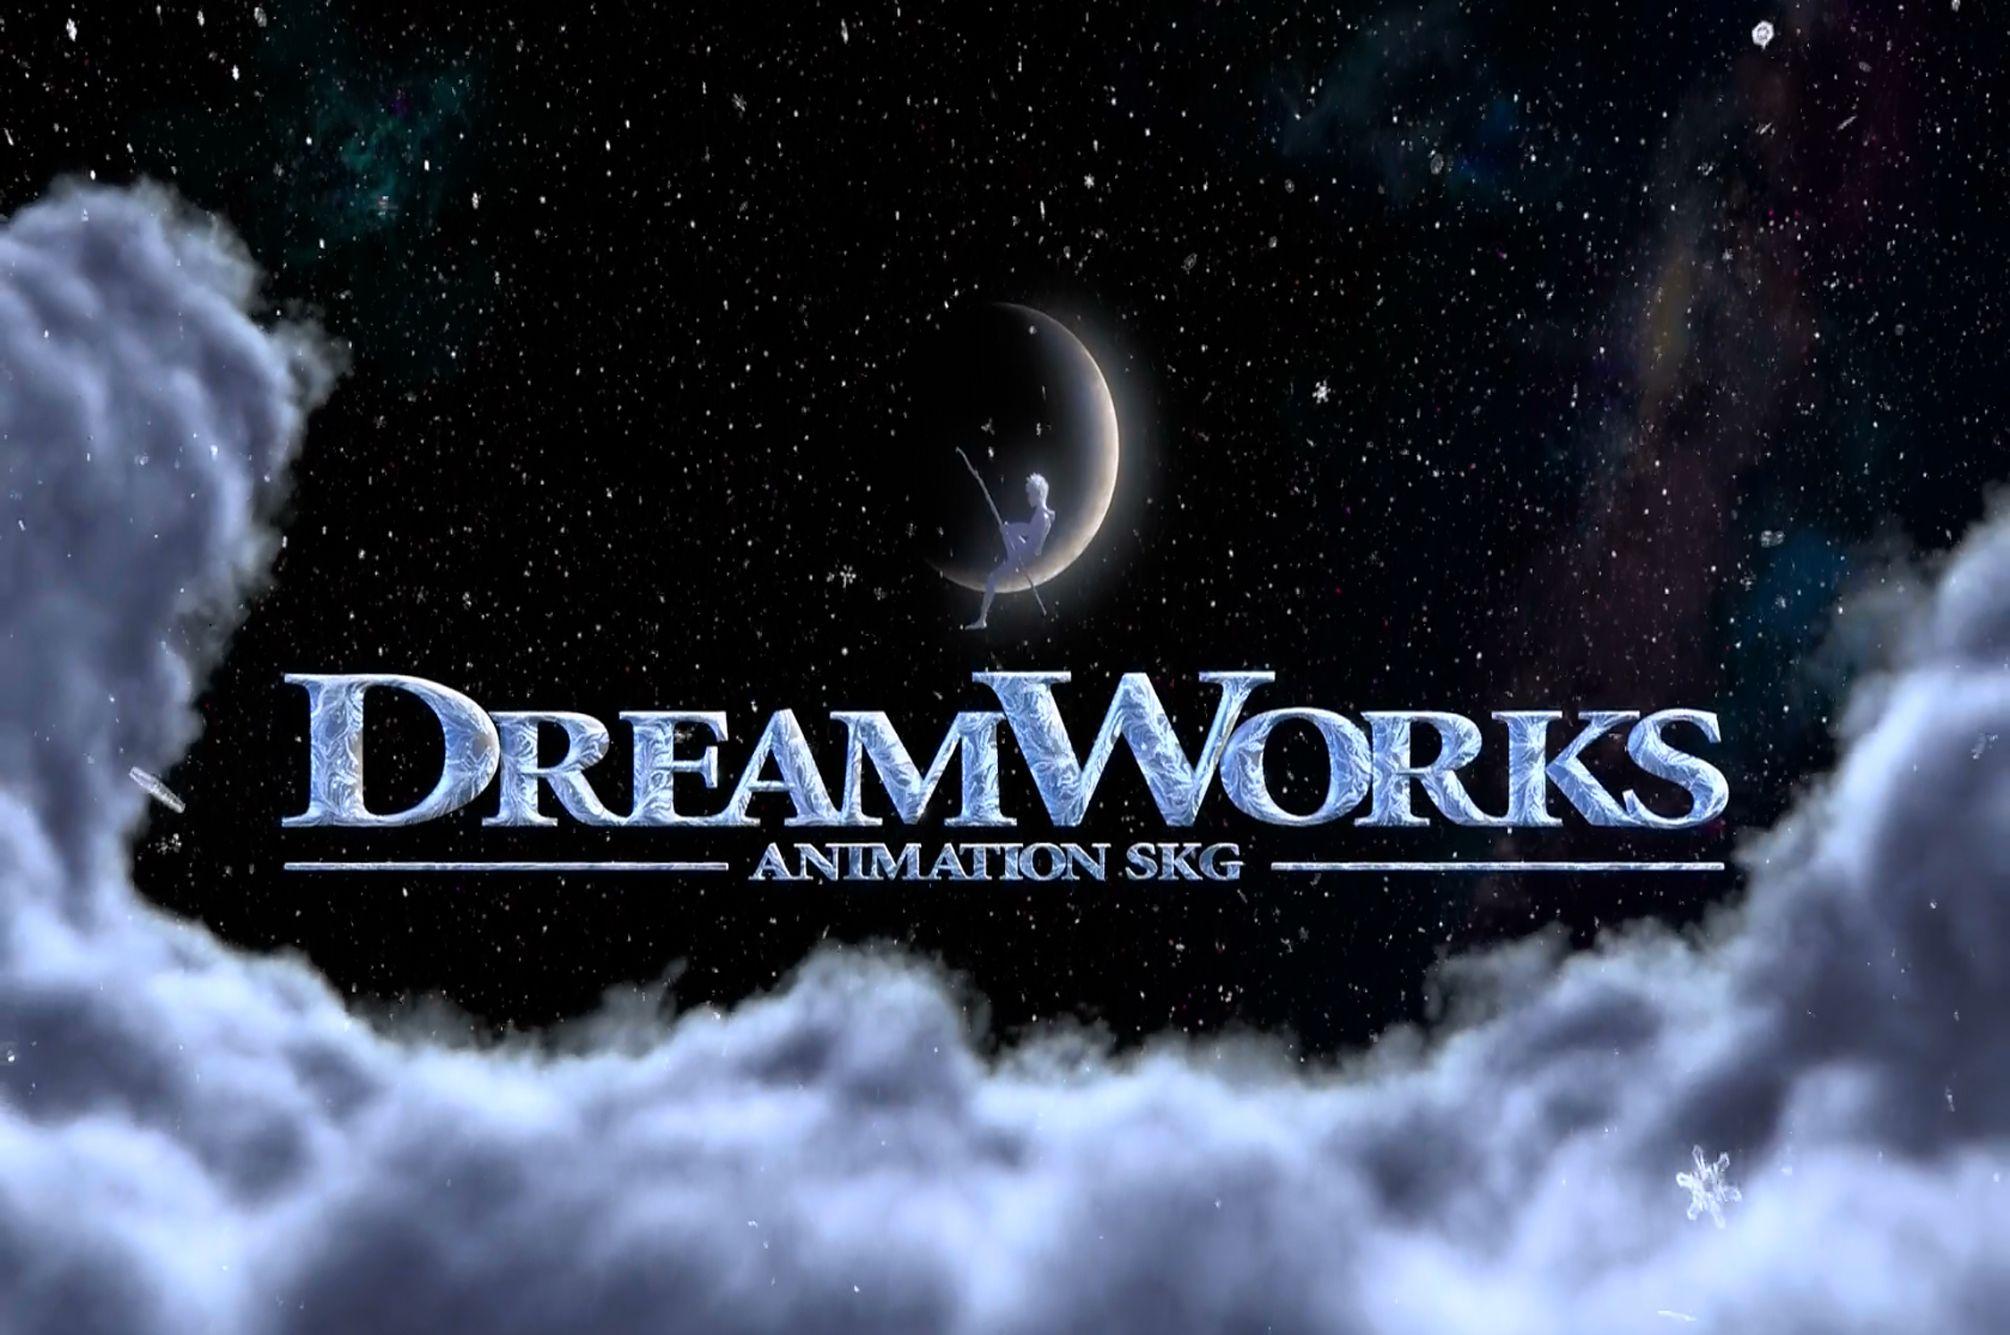 DreamWorks Animation SKG Logo - DreamWorks Animation SKG, Inc